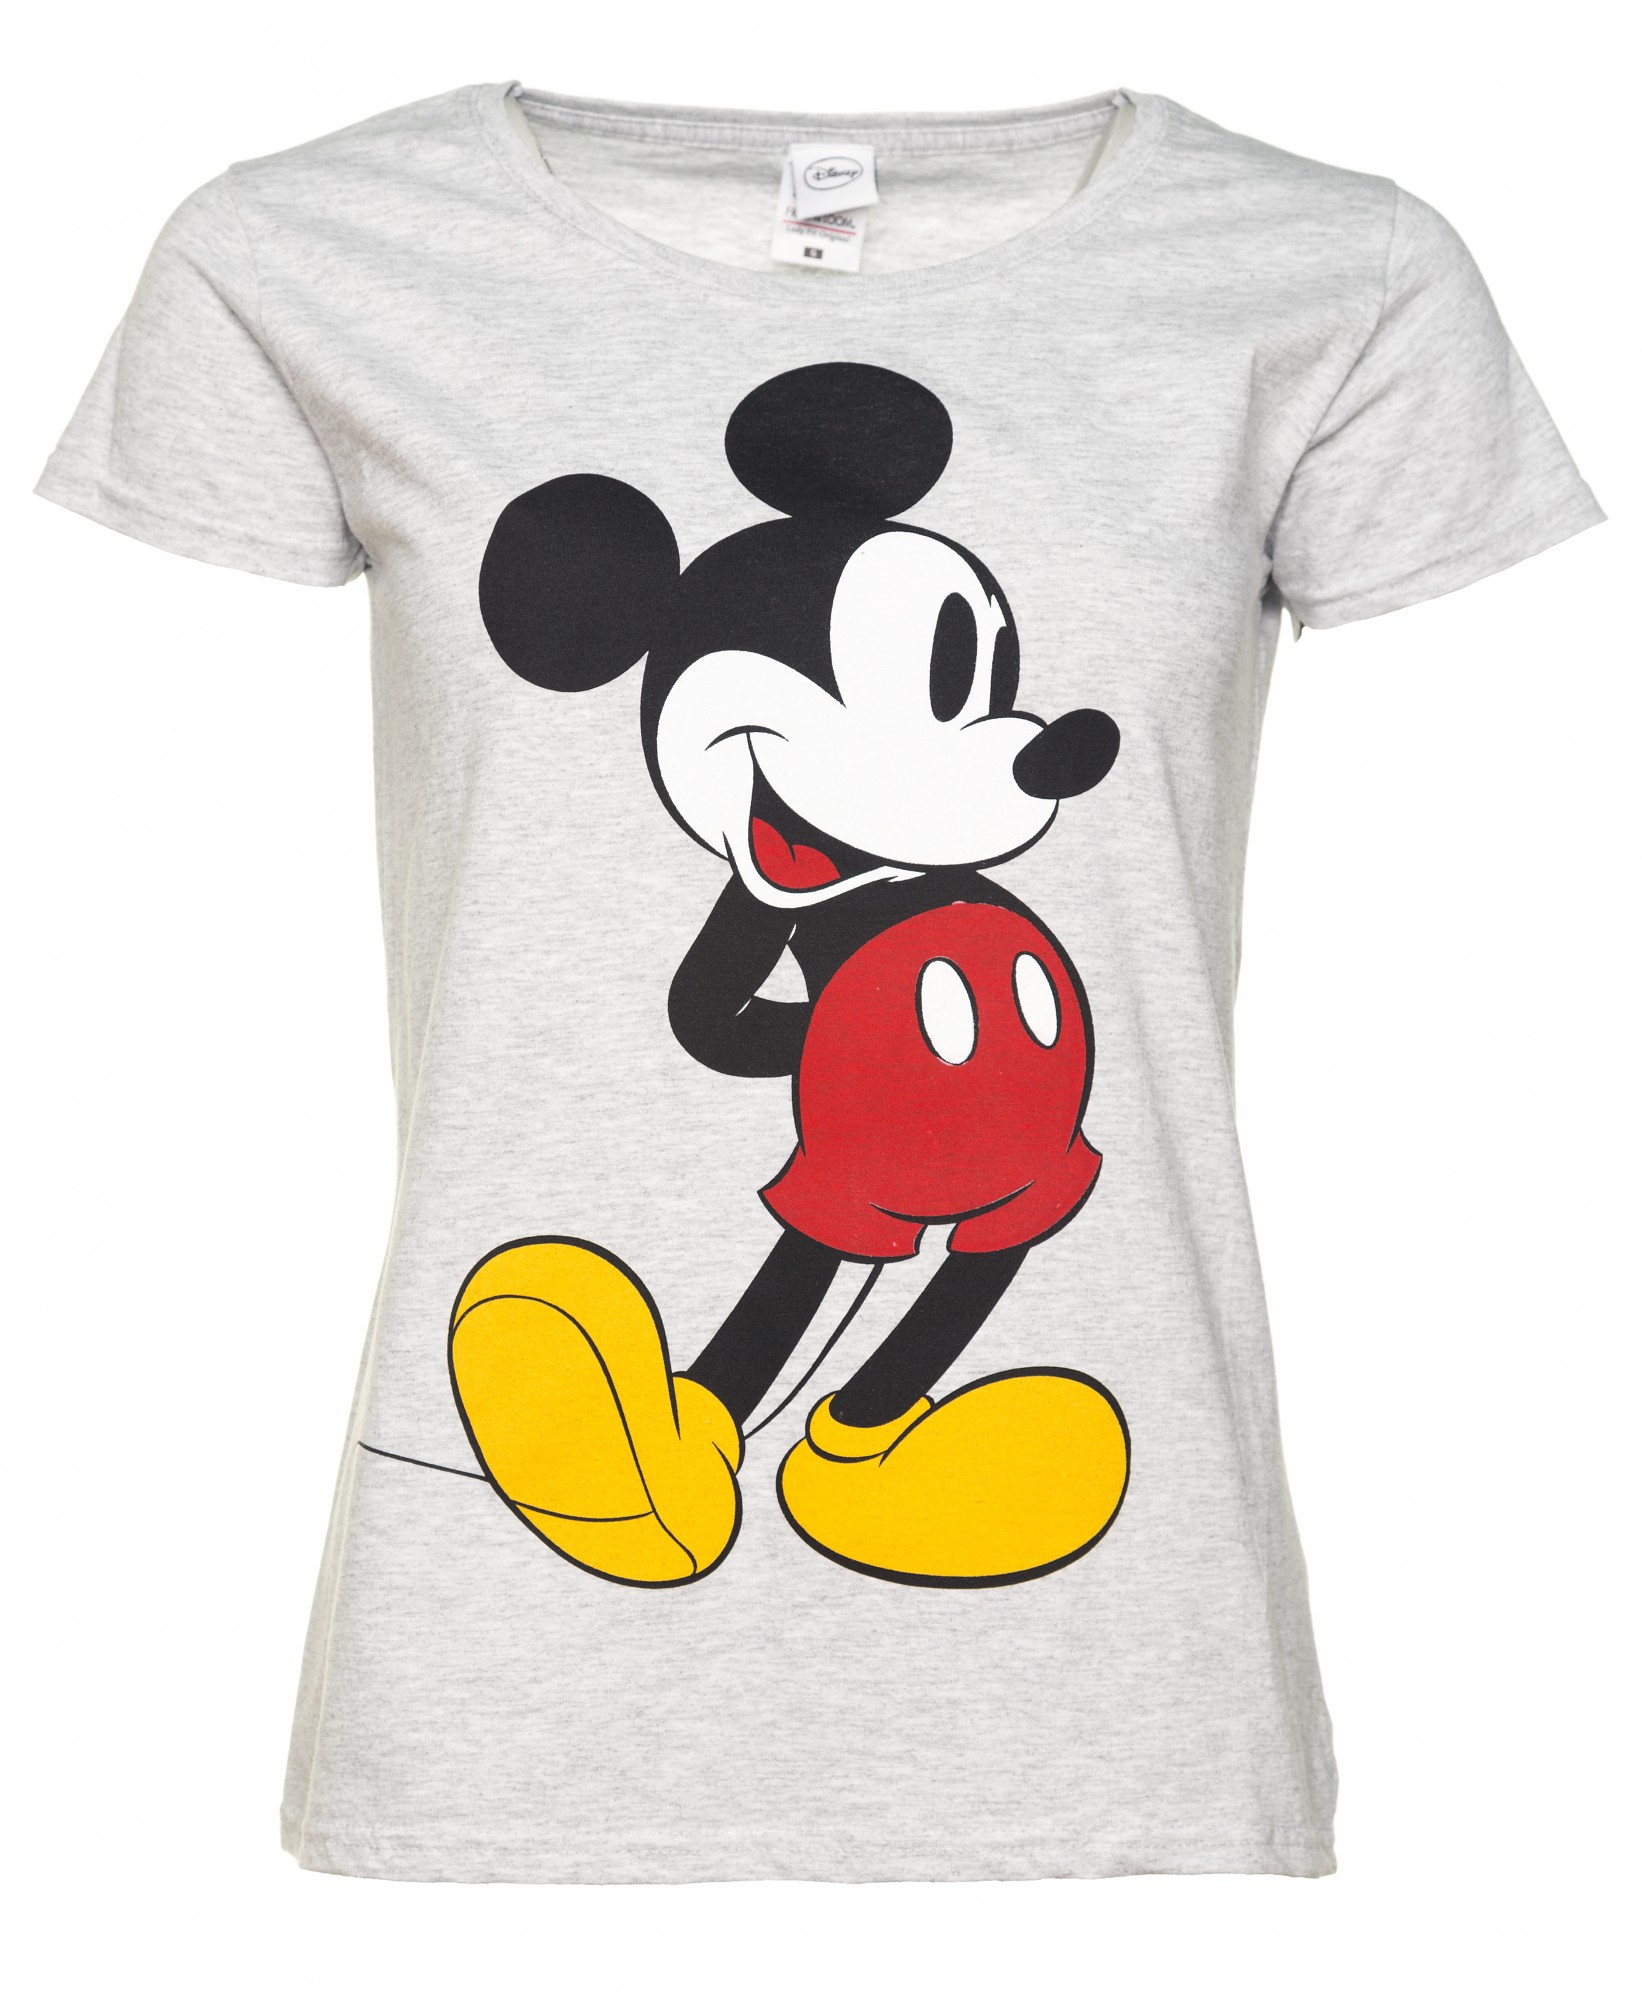 Women's Grey Marl Classic Mickey Mouse Disney TShirt